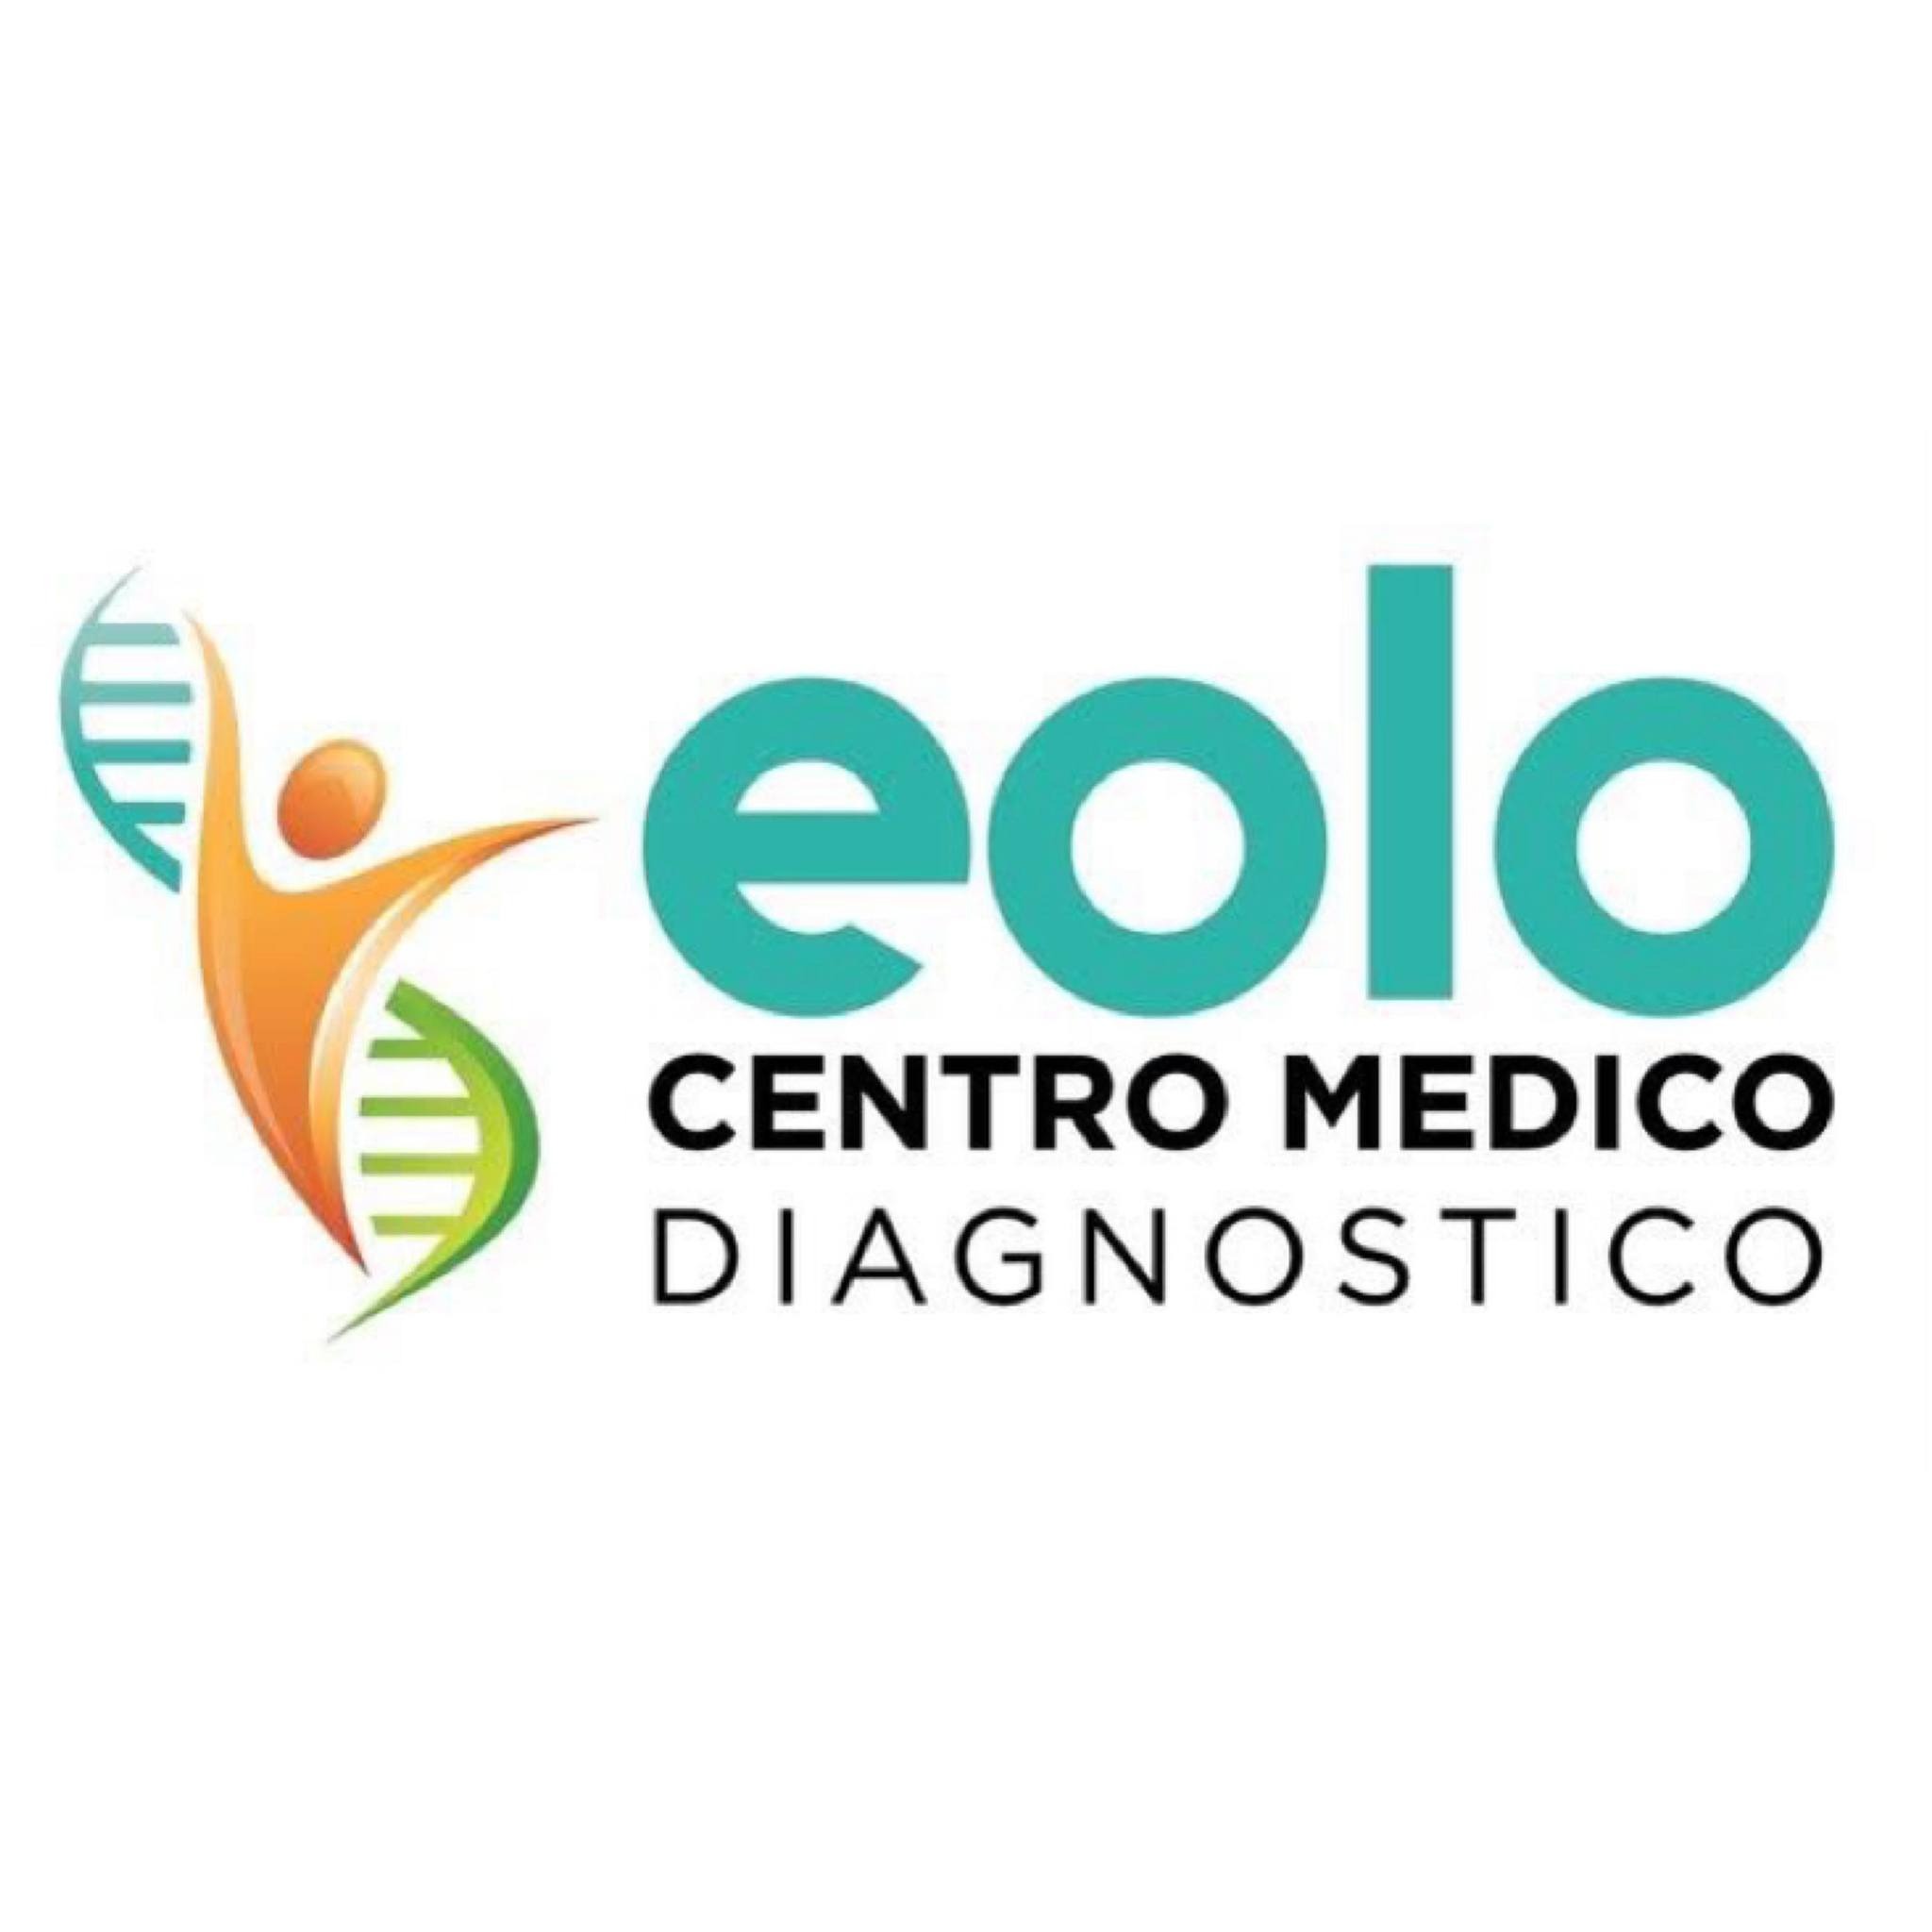 Eolo Centro Medico Diagnostico